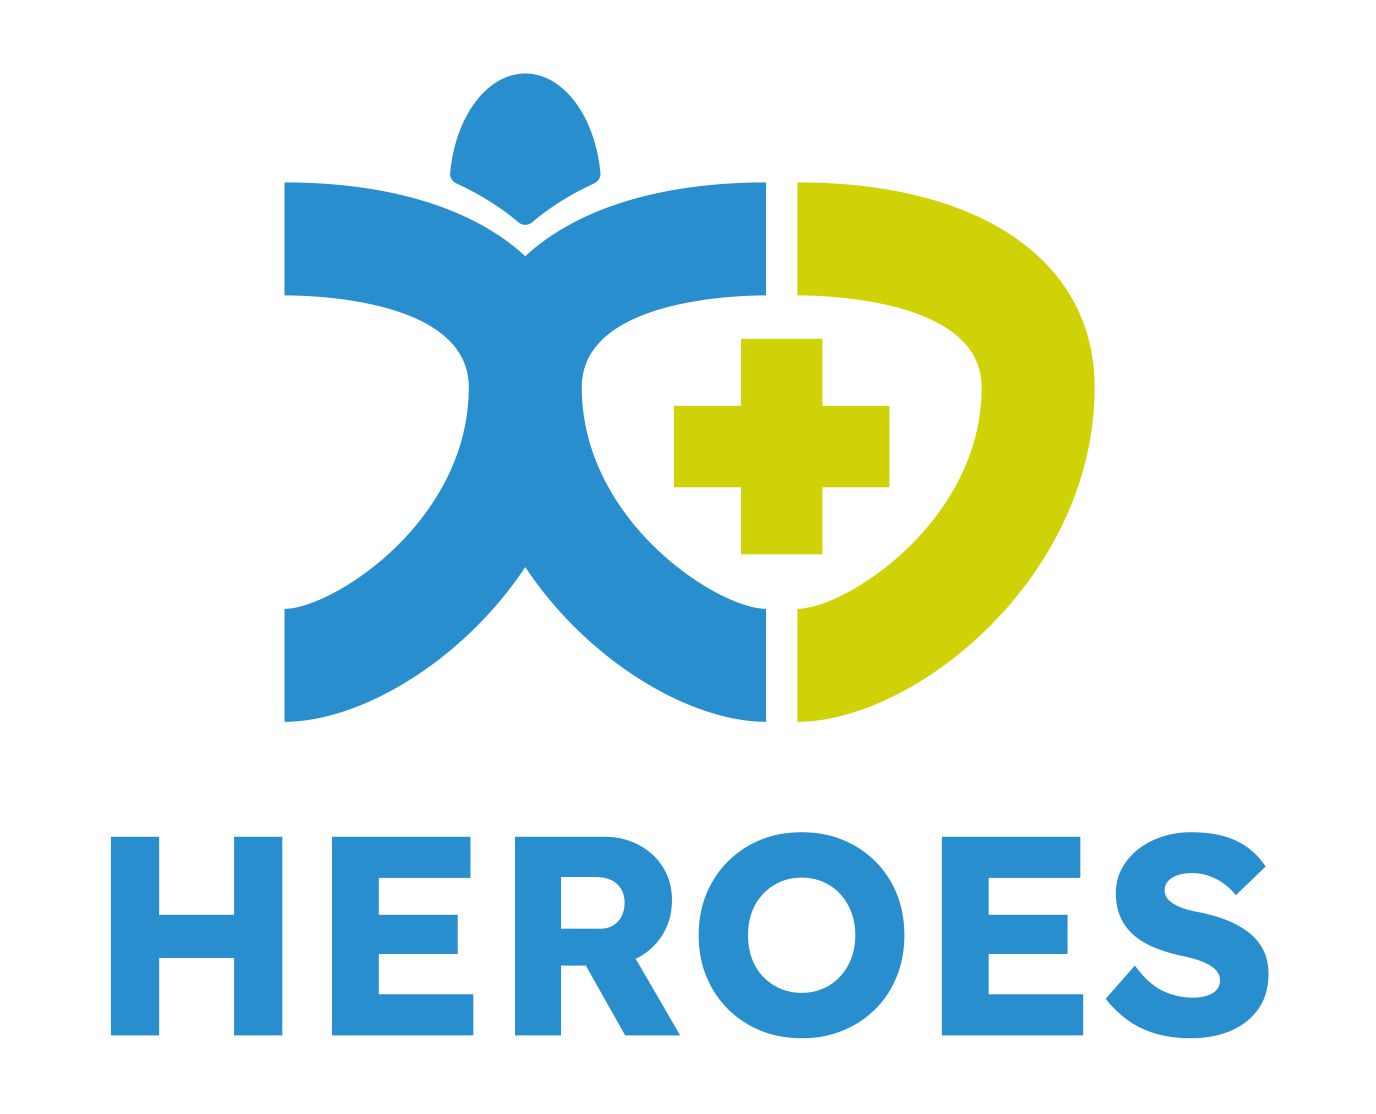 JA HEROES | Health Workforce Planning Project